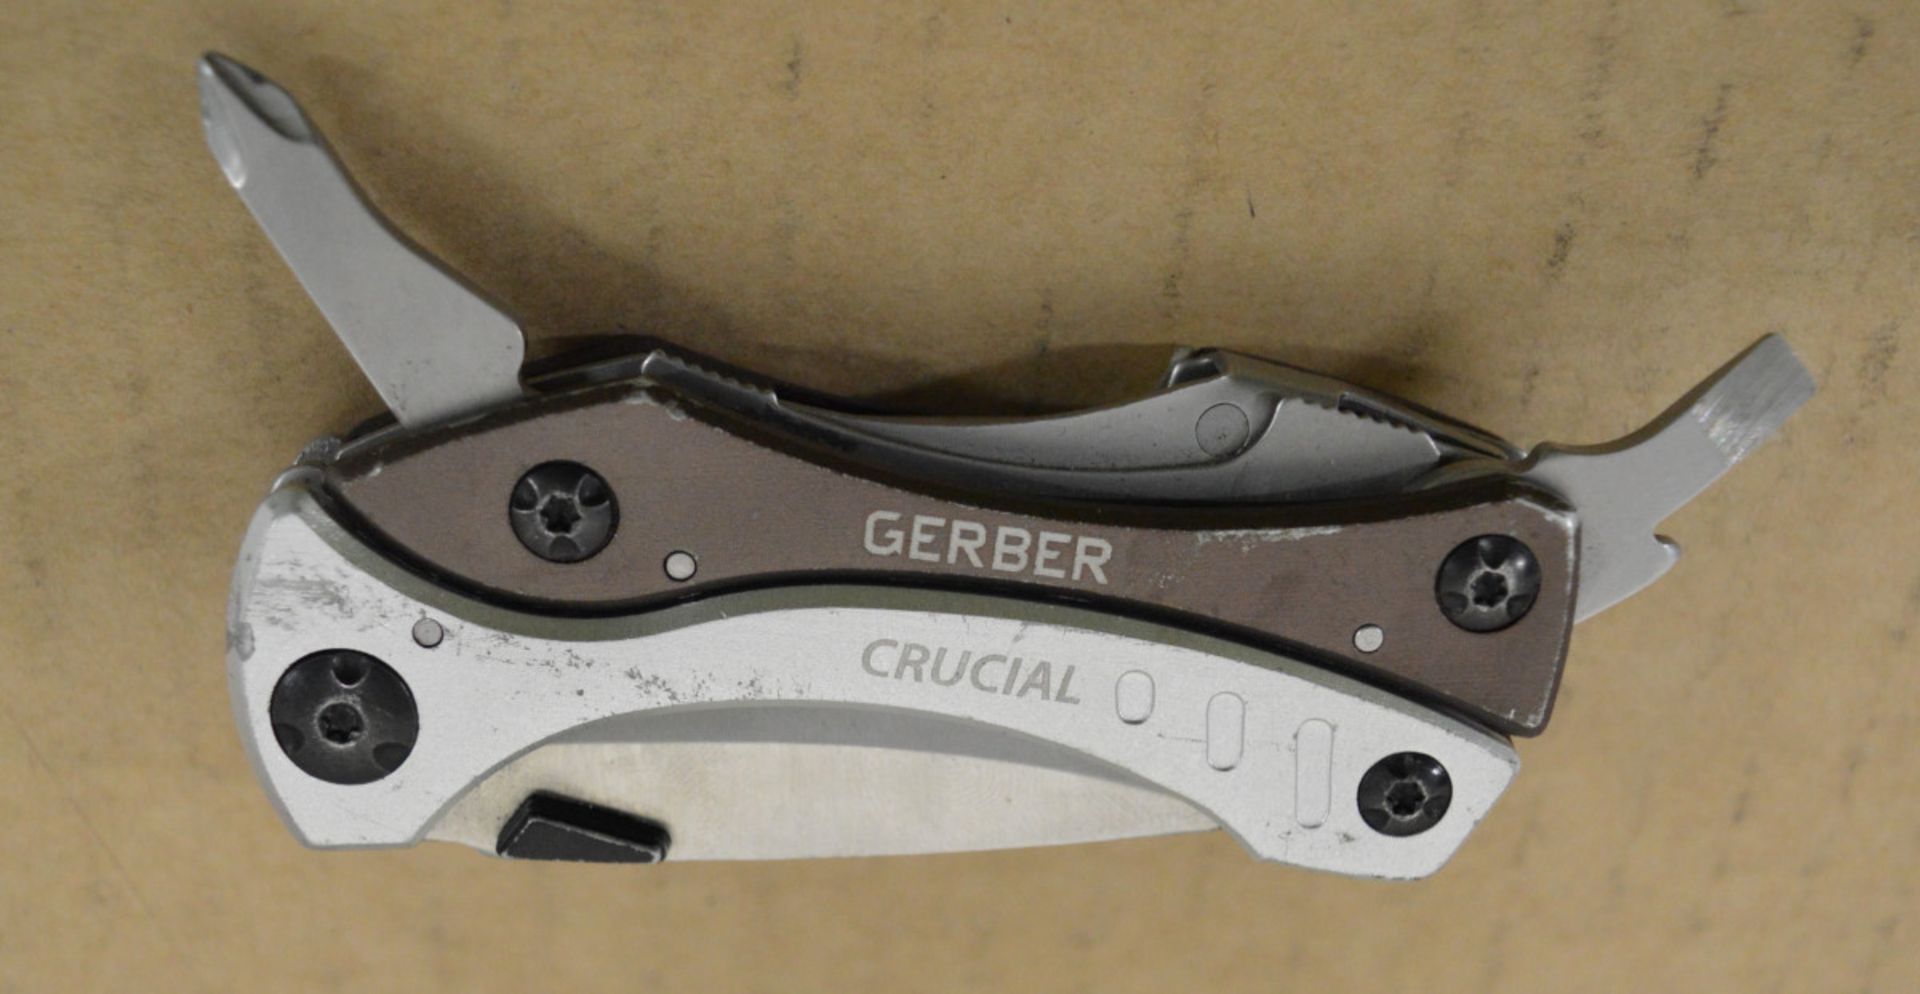 Gerber Crucial Penknife - Image 6 of 6